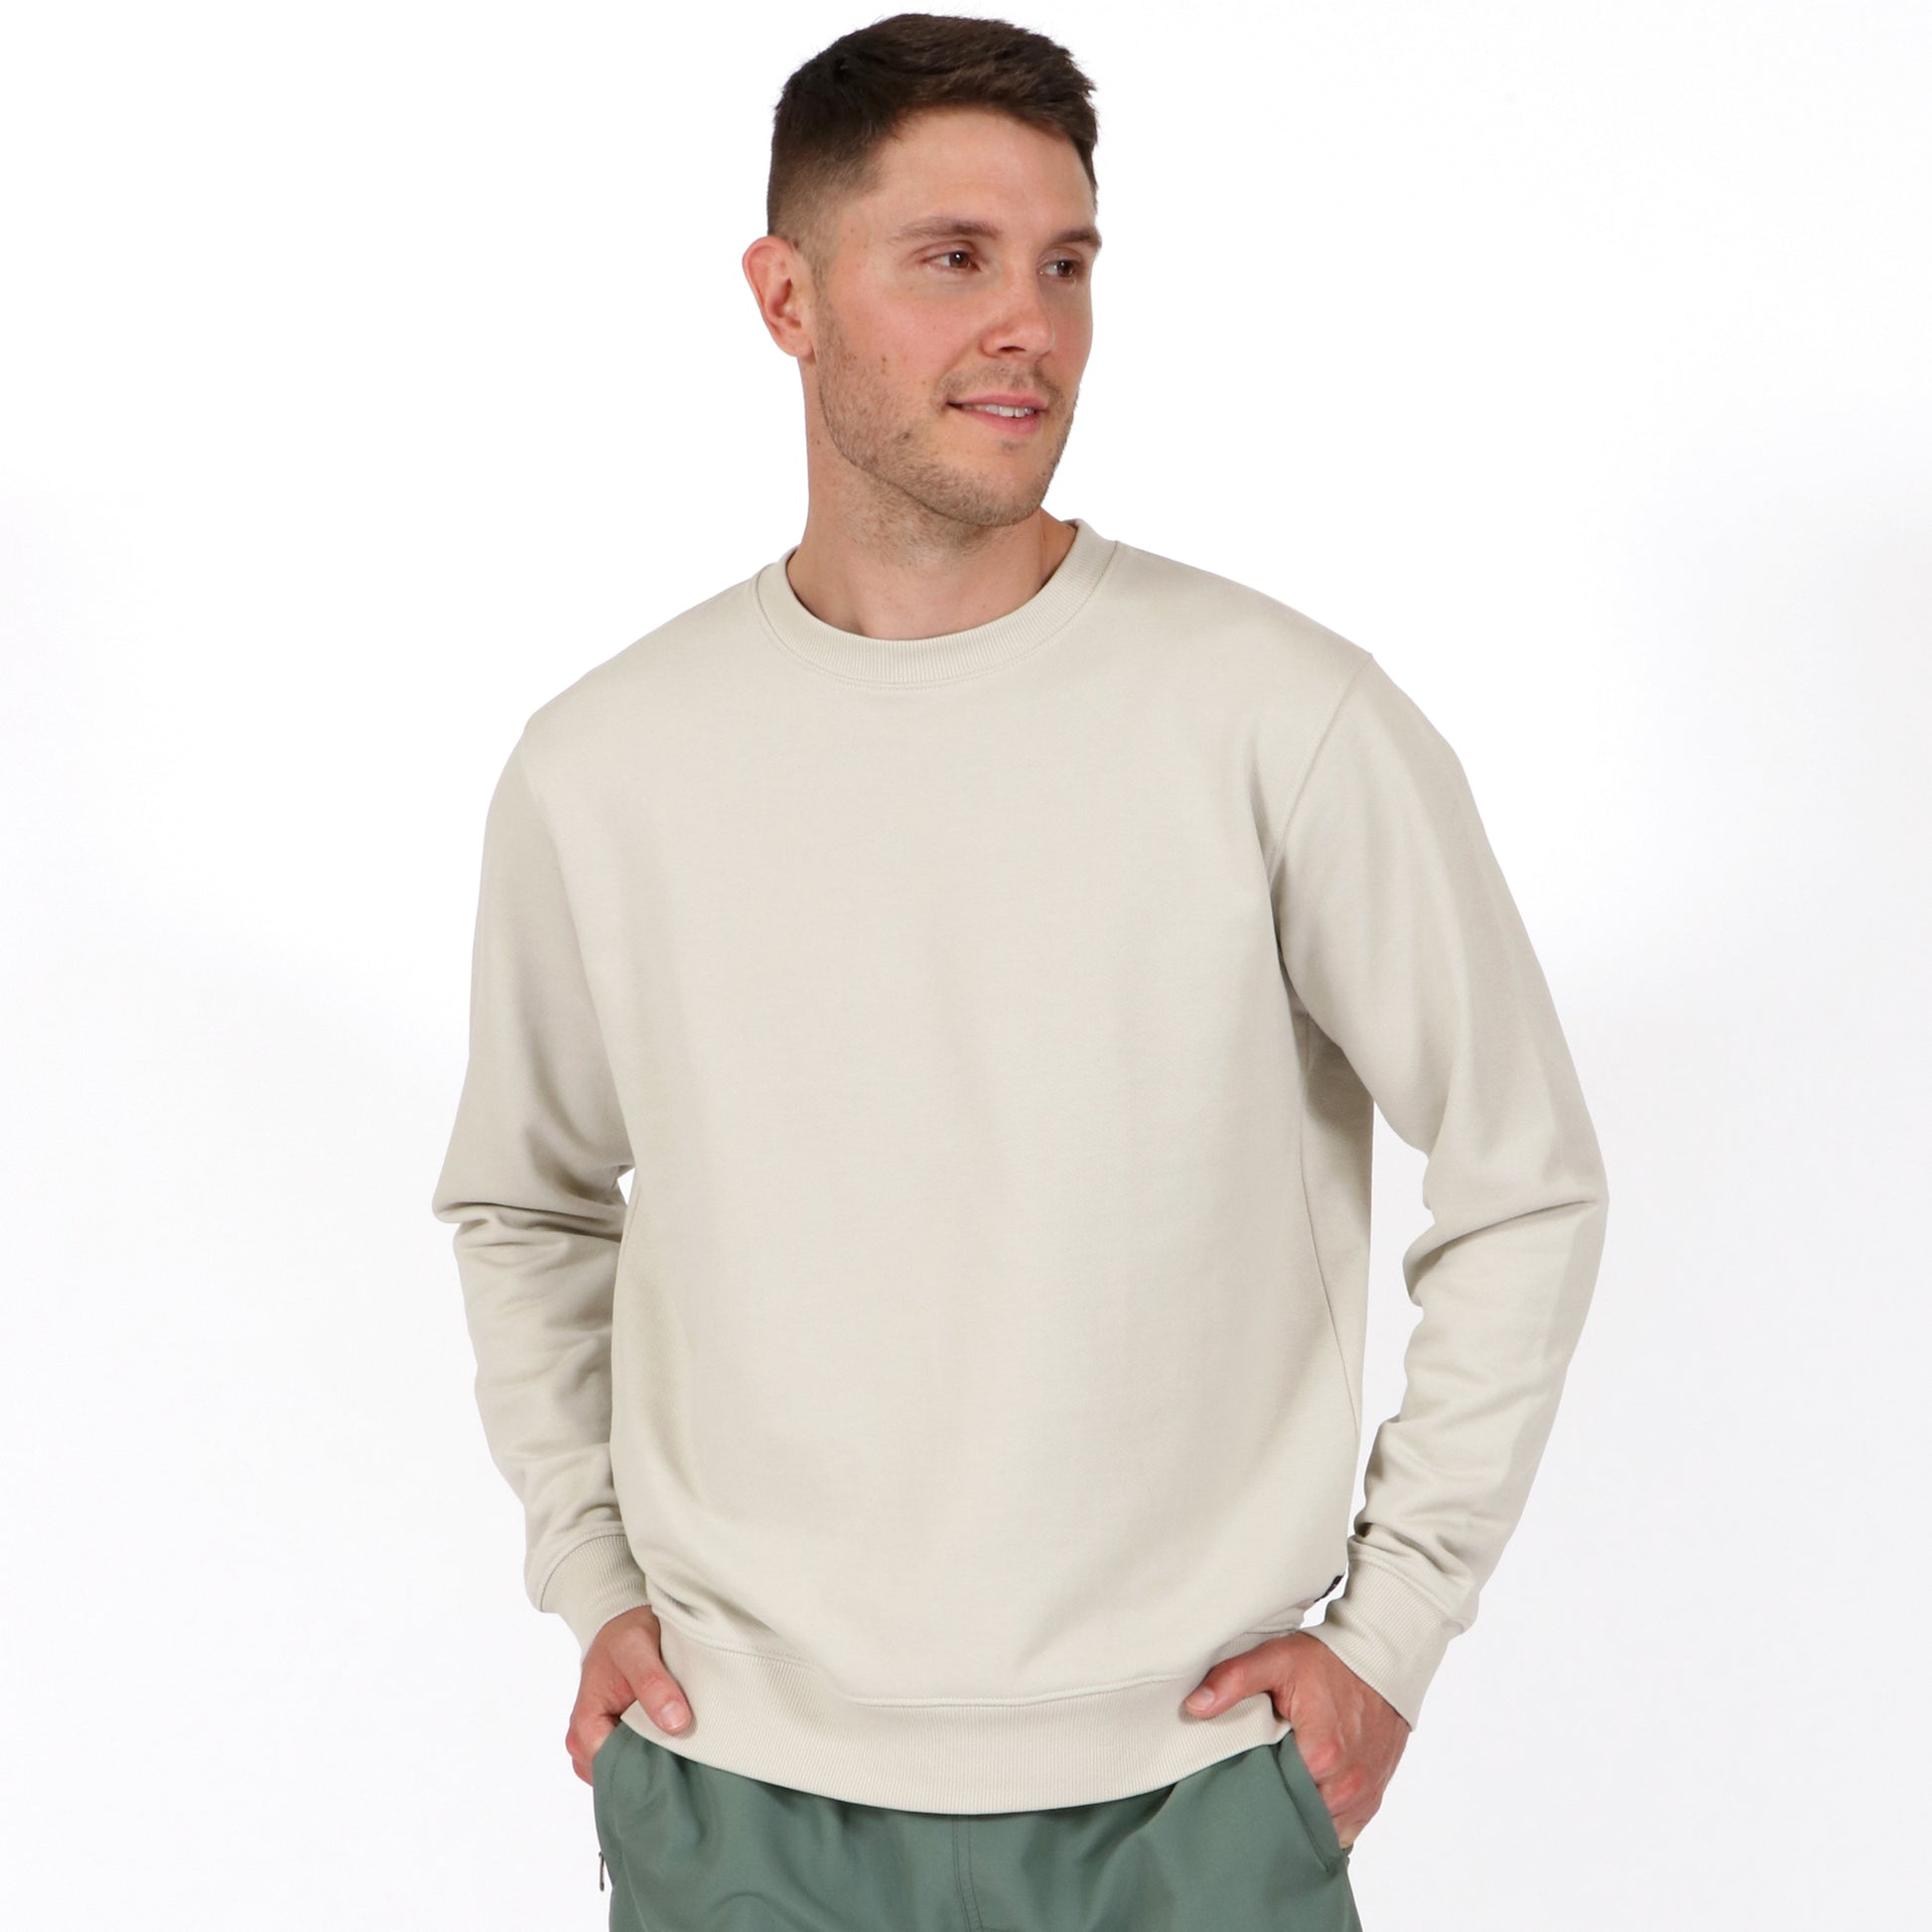 Sandstone Neutral Men's Organic Cotton Sweatshirt Front on model